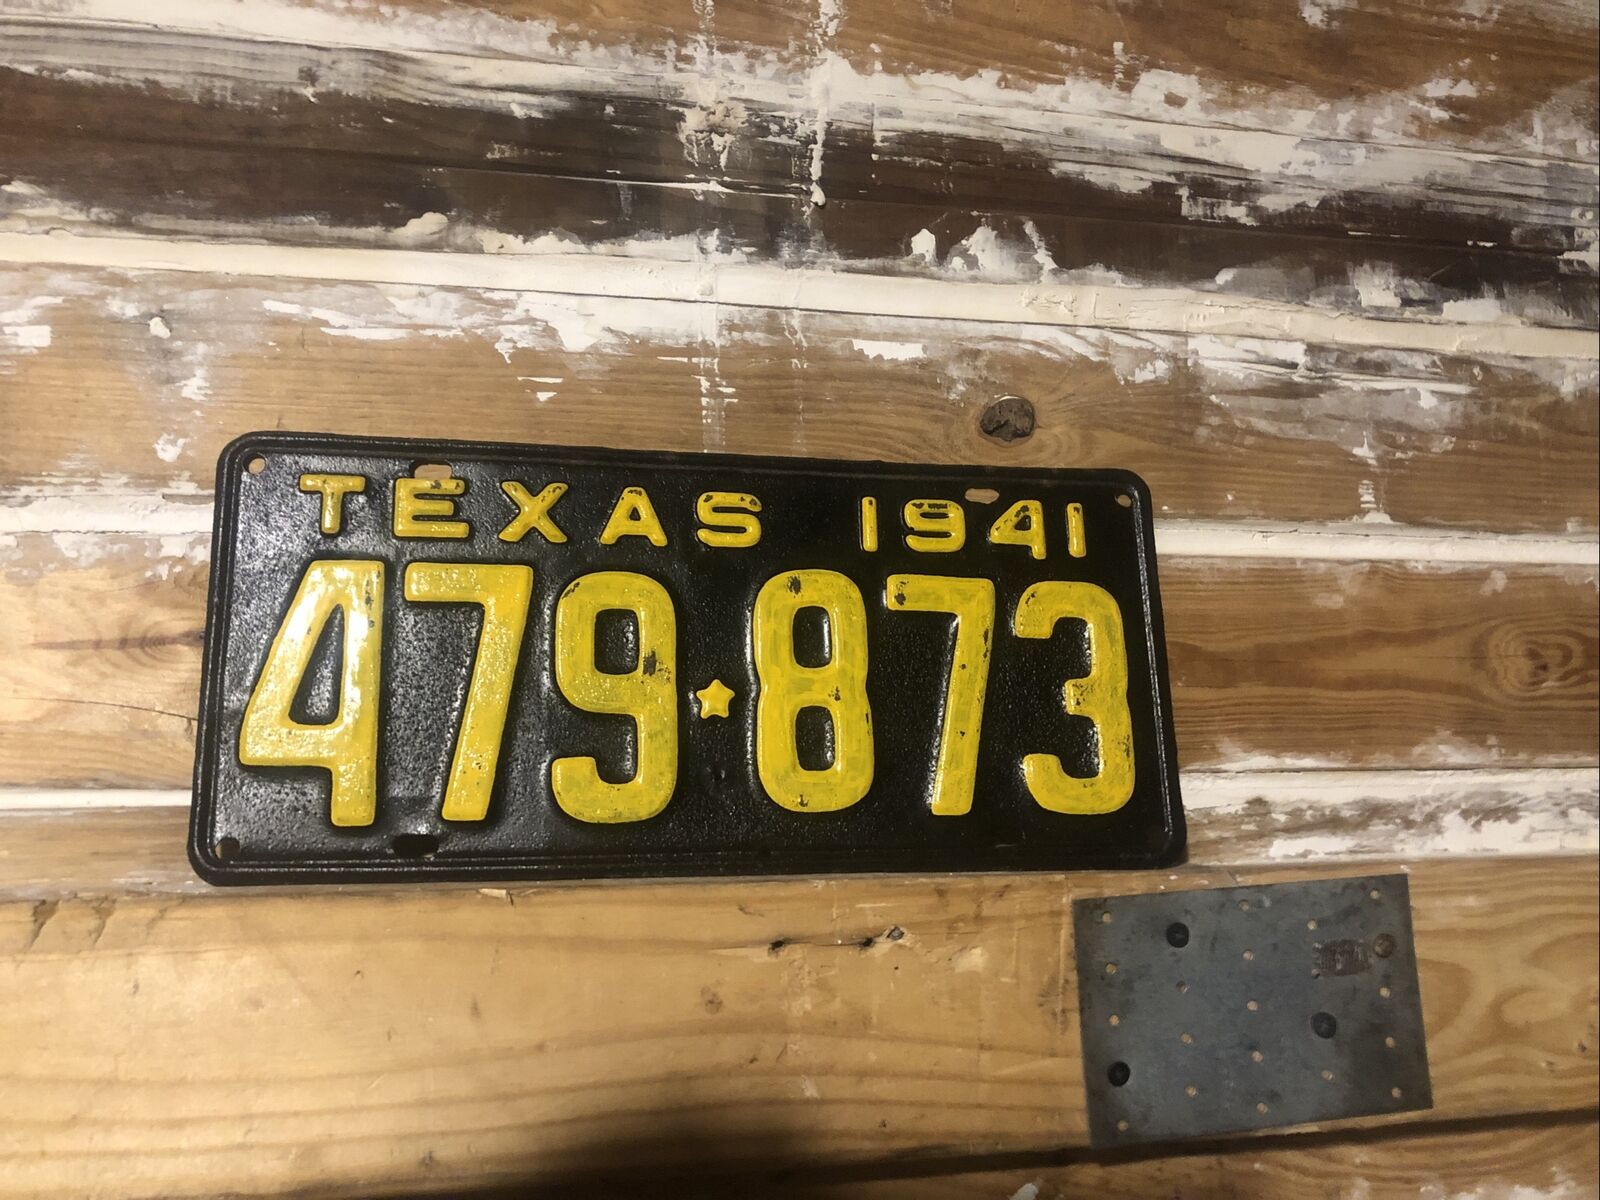 Texas license plates 1941 479 873